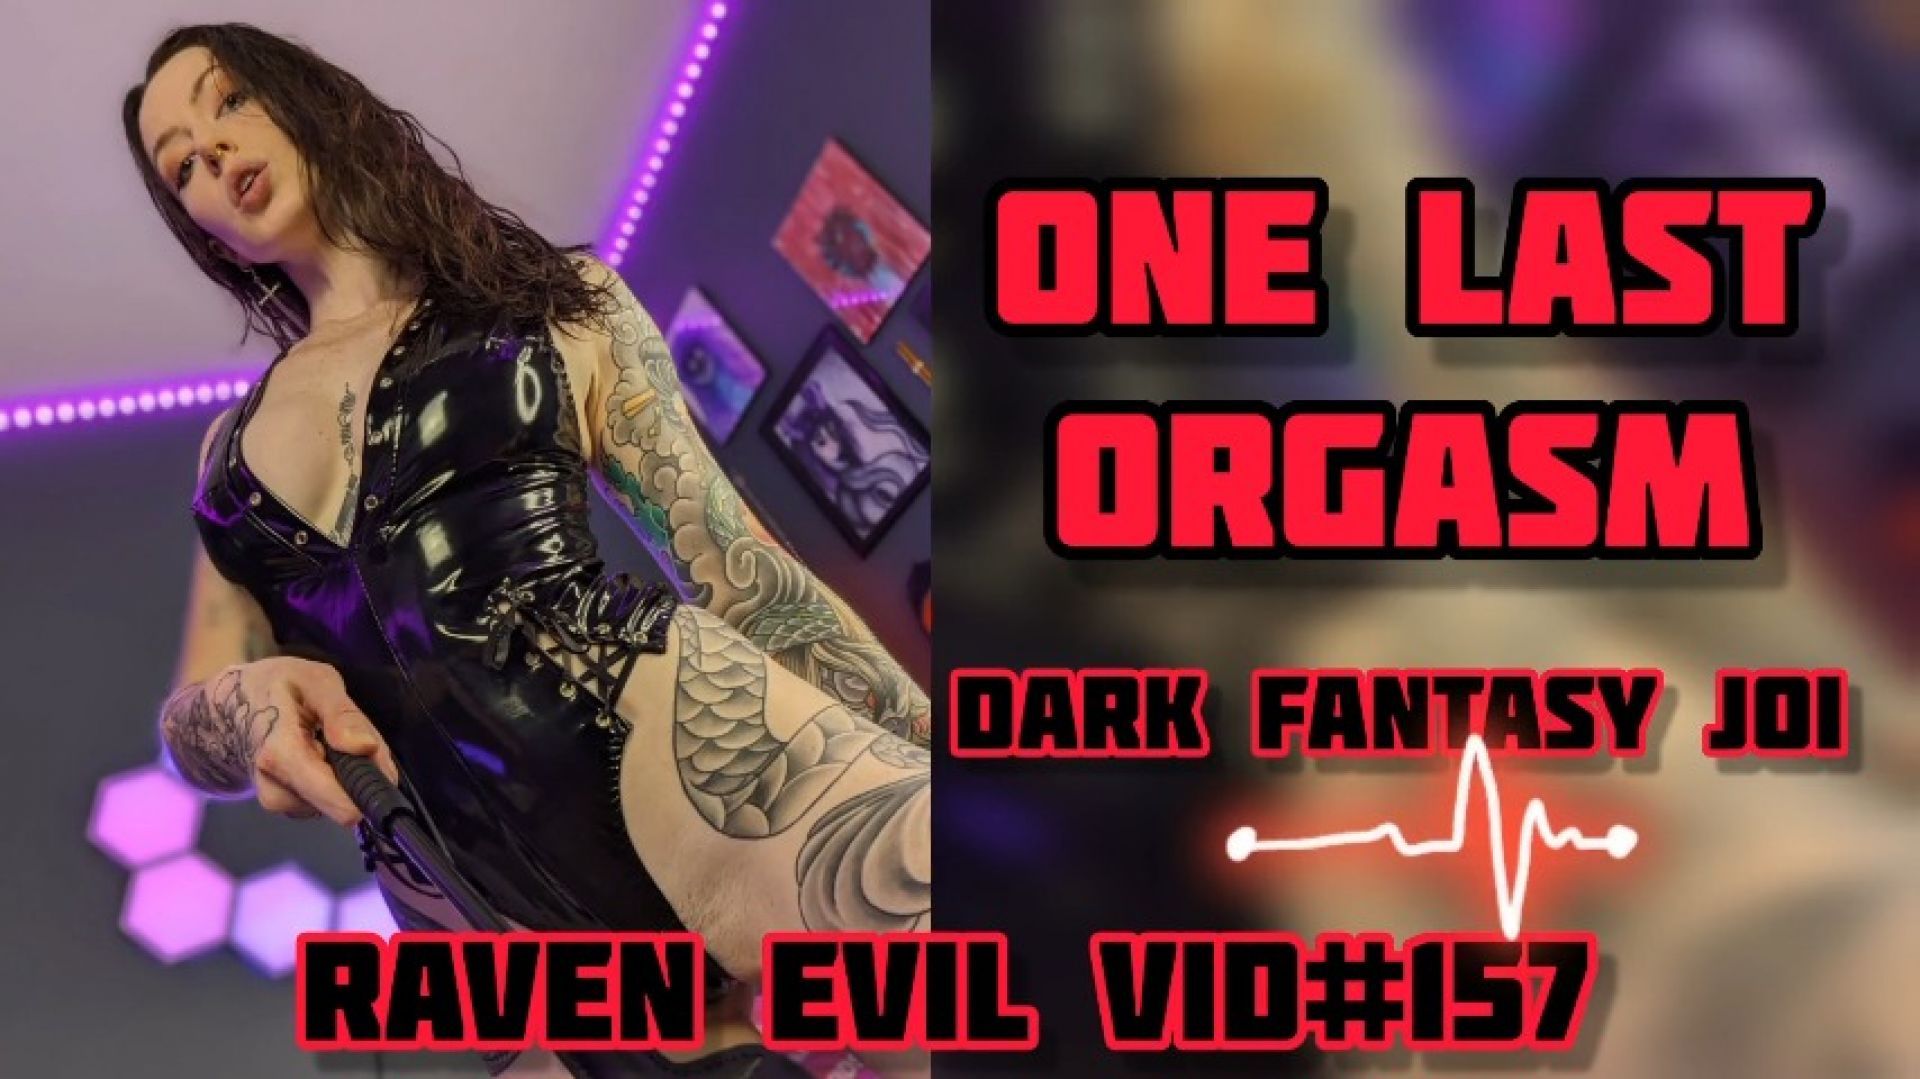 One Last Orgasm - Dark Fantasy JOI